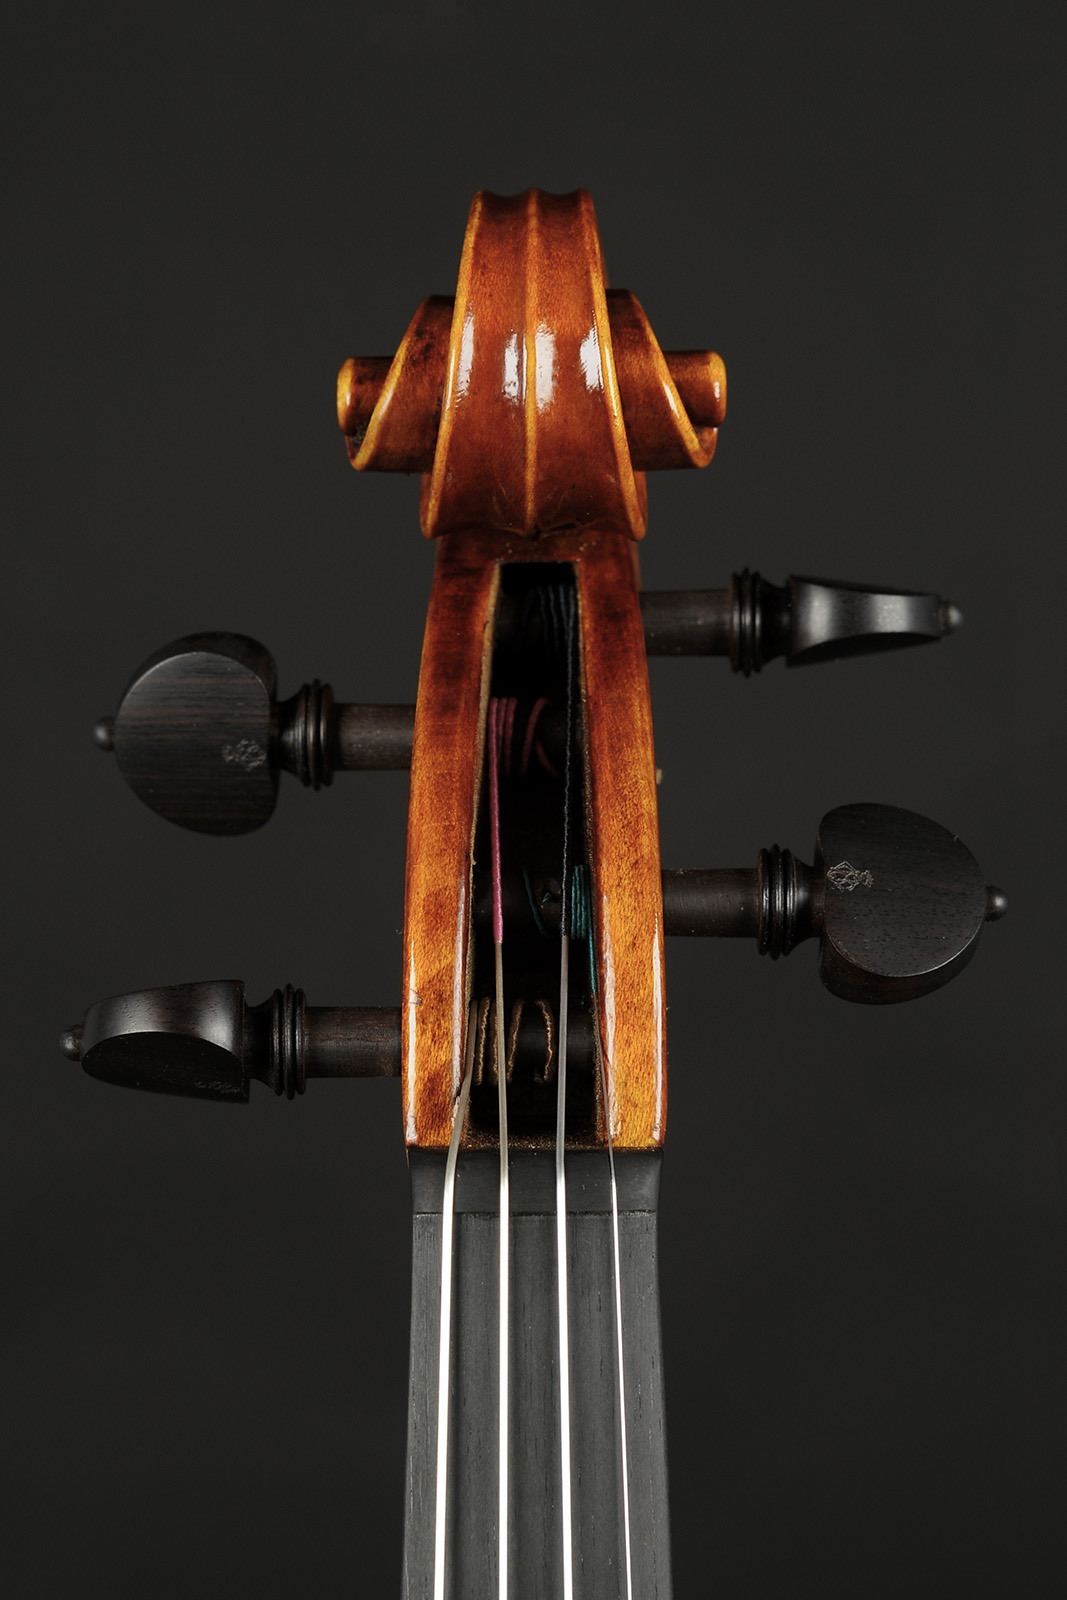 Antonio Stradivari Cremona 1720 “Santa Maria“ - Image 6